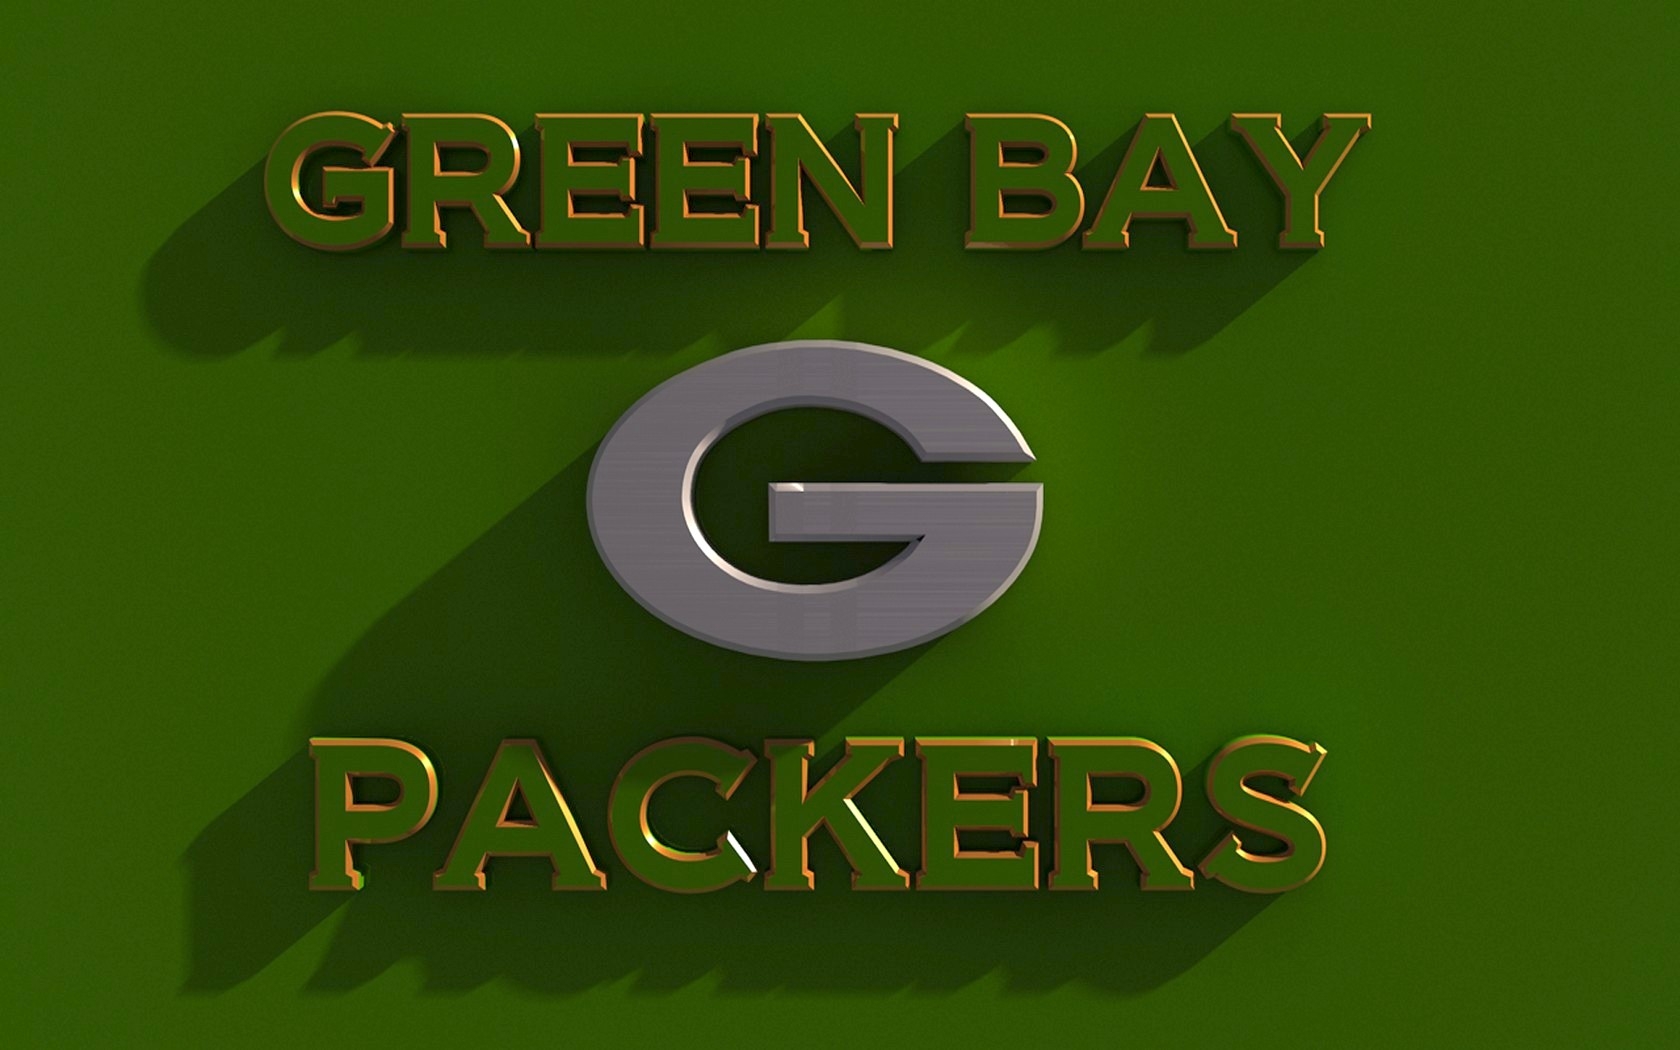 Green Bay Packers Wallpaper HD Image